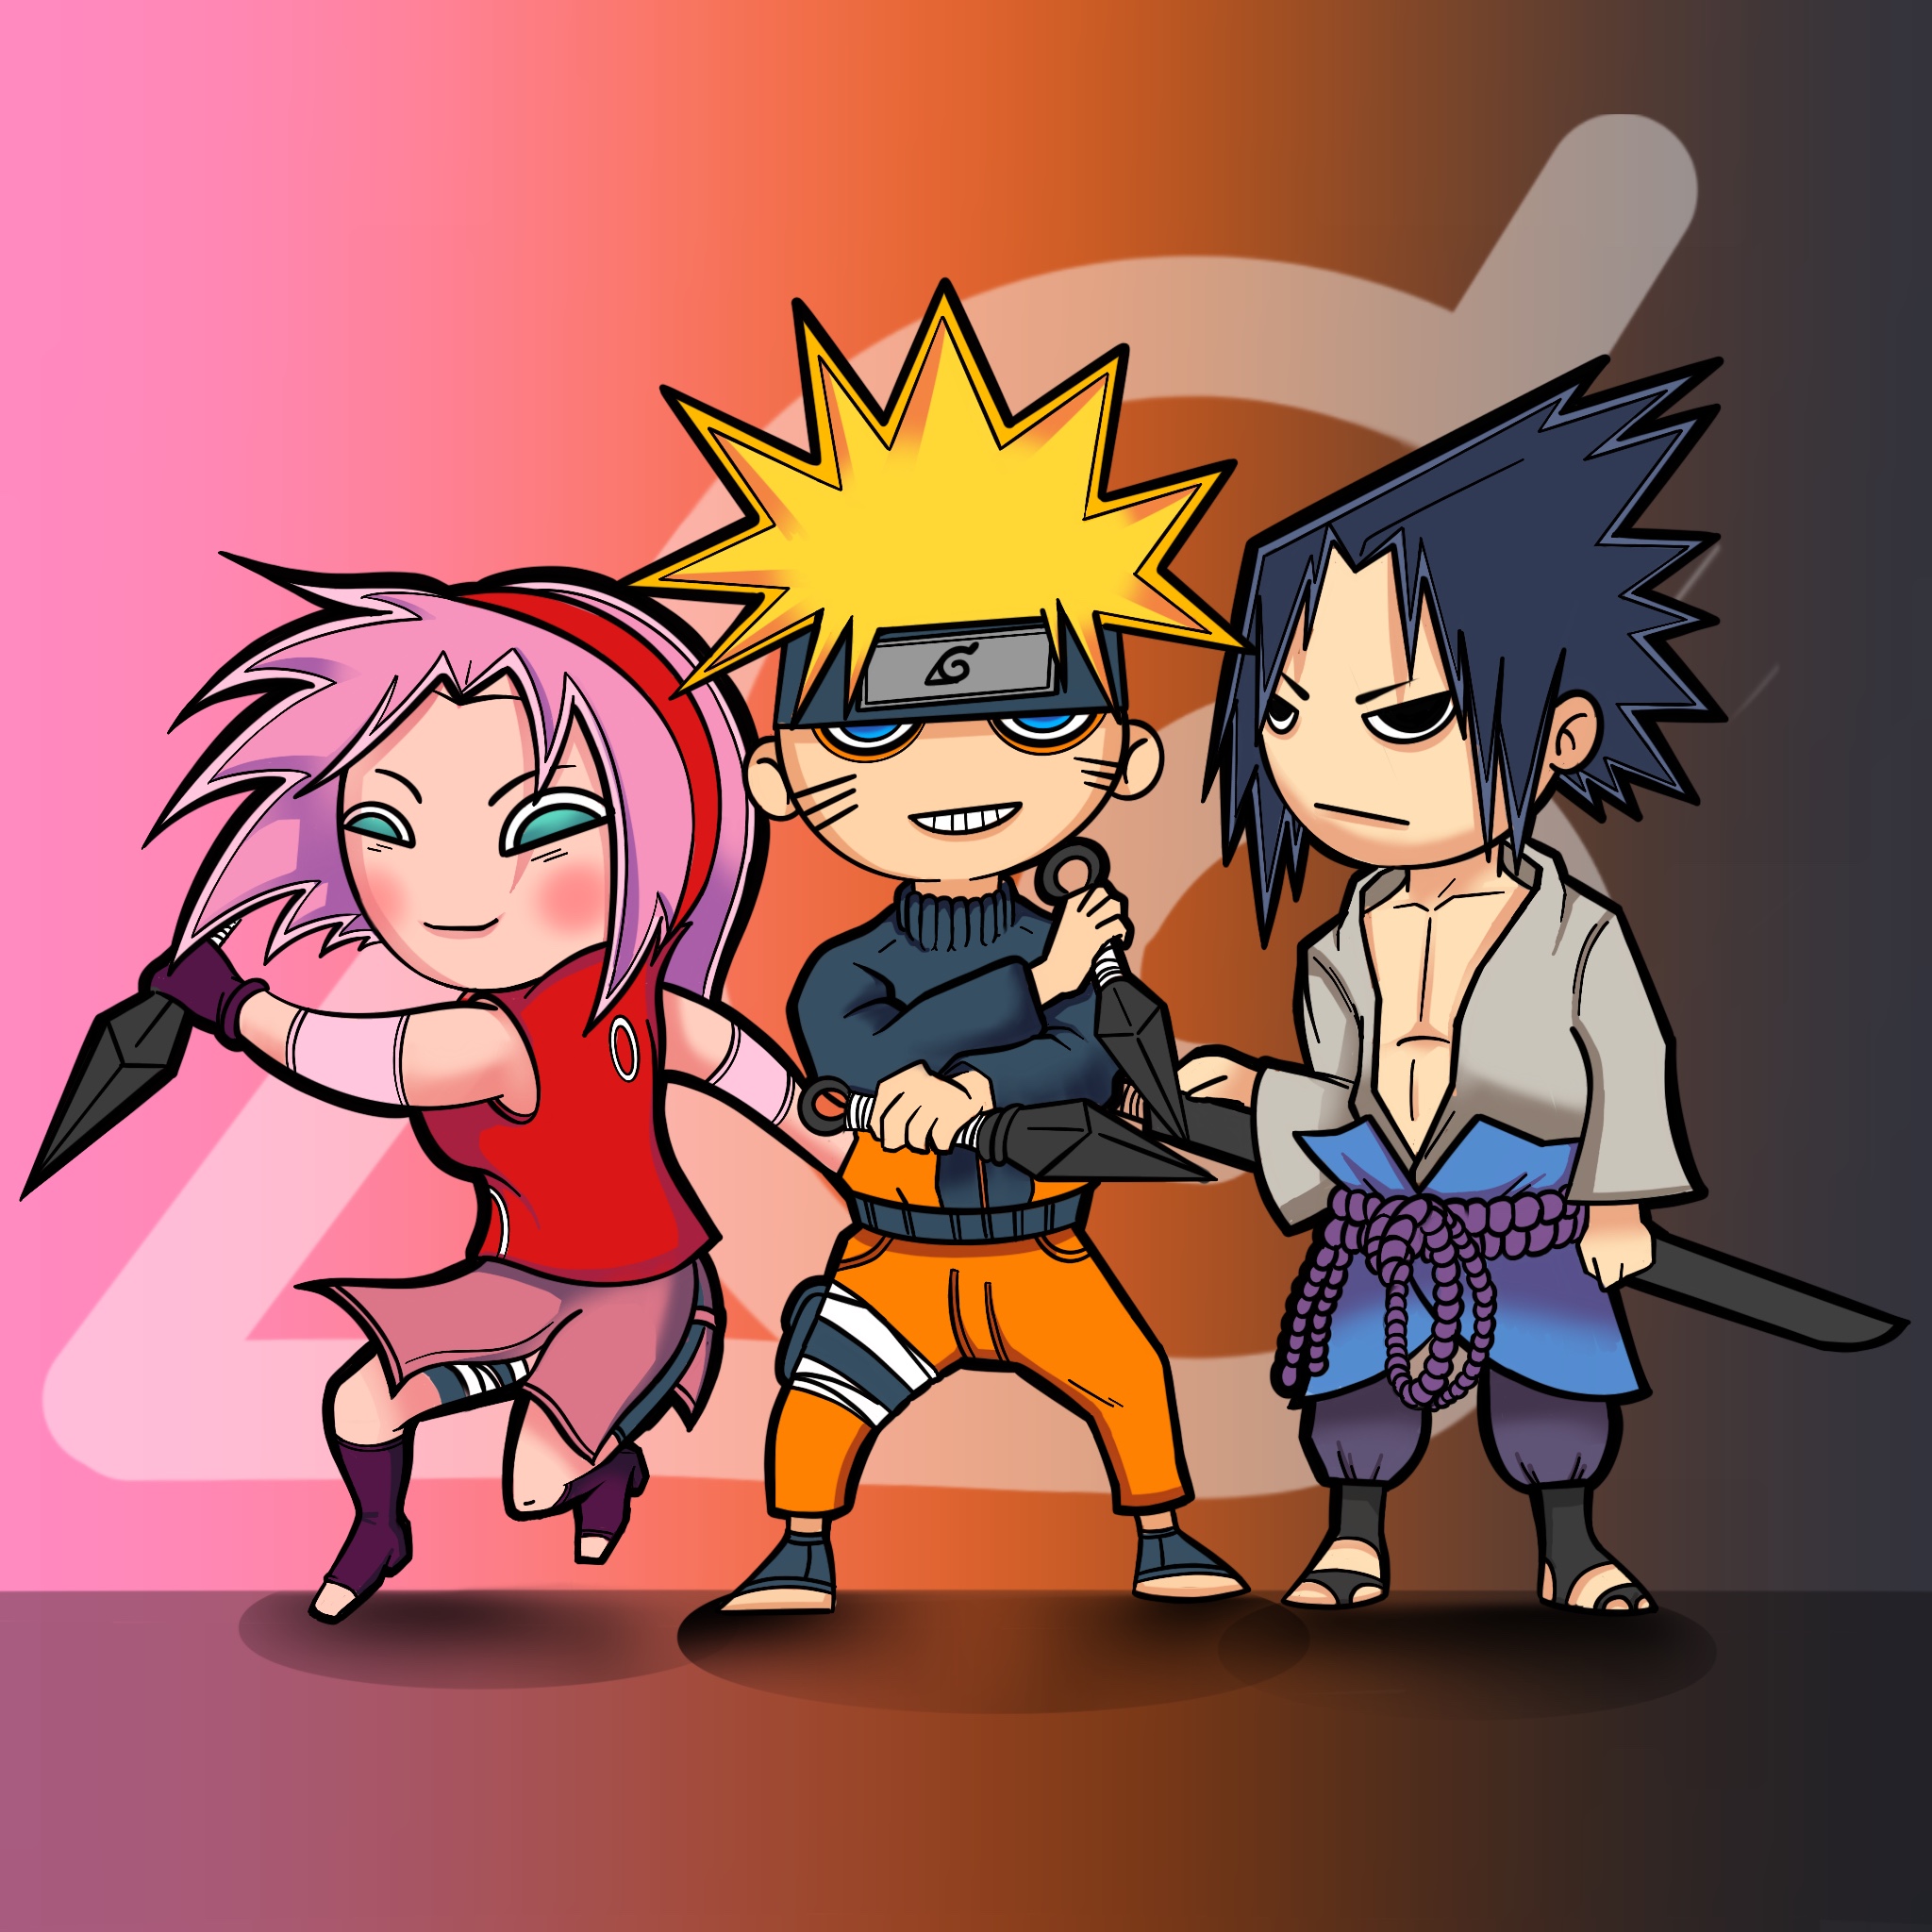 Dessin de Sakura Naruto et Sasuke, les héros de l'anime Naruto